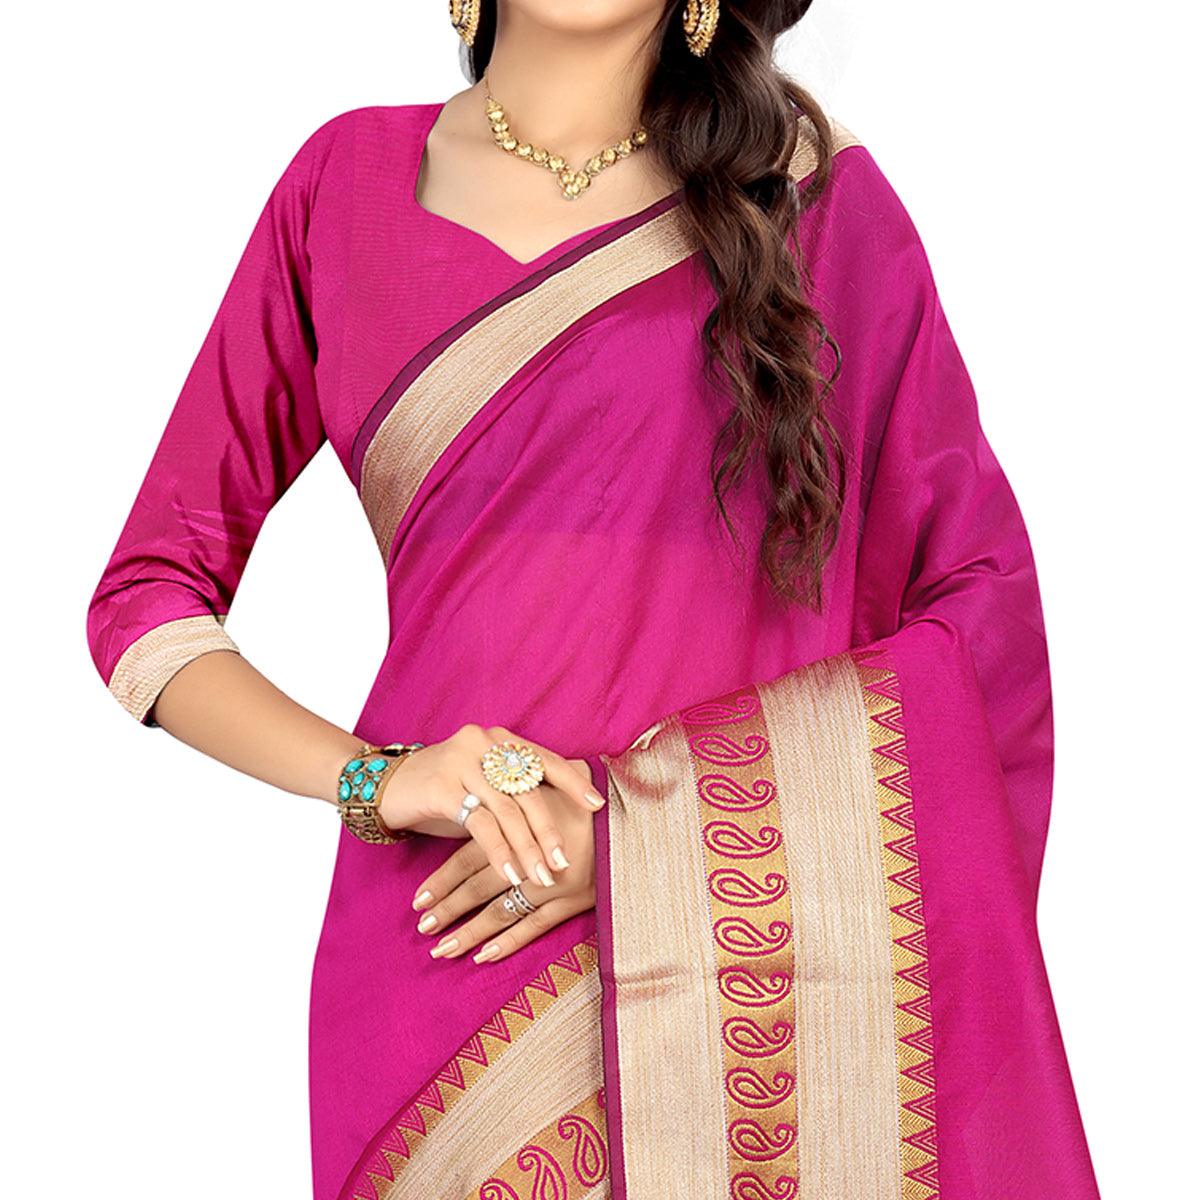 Beautiful Pink Colored Festive Wear Woven Silk Saree - Peachmode